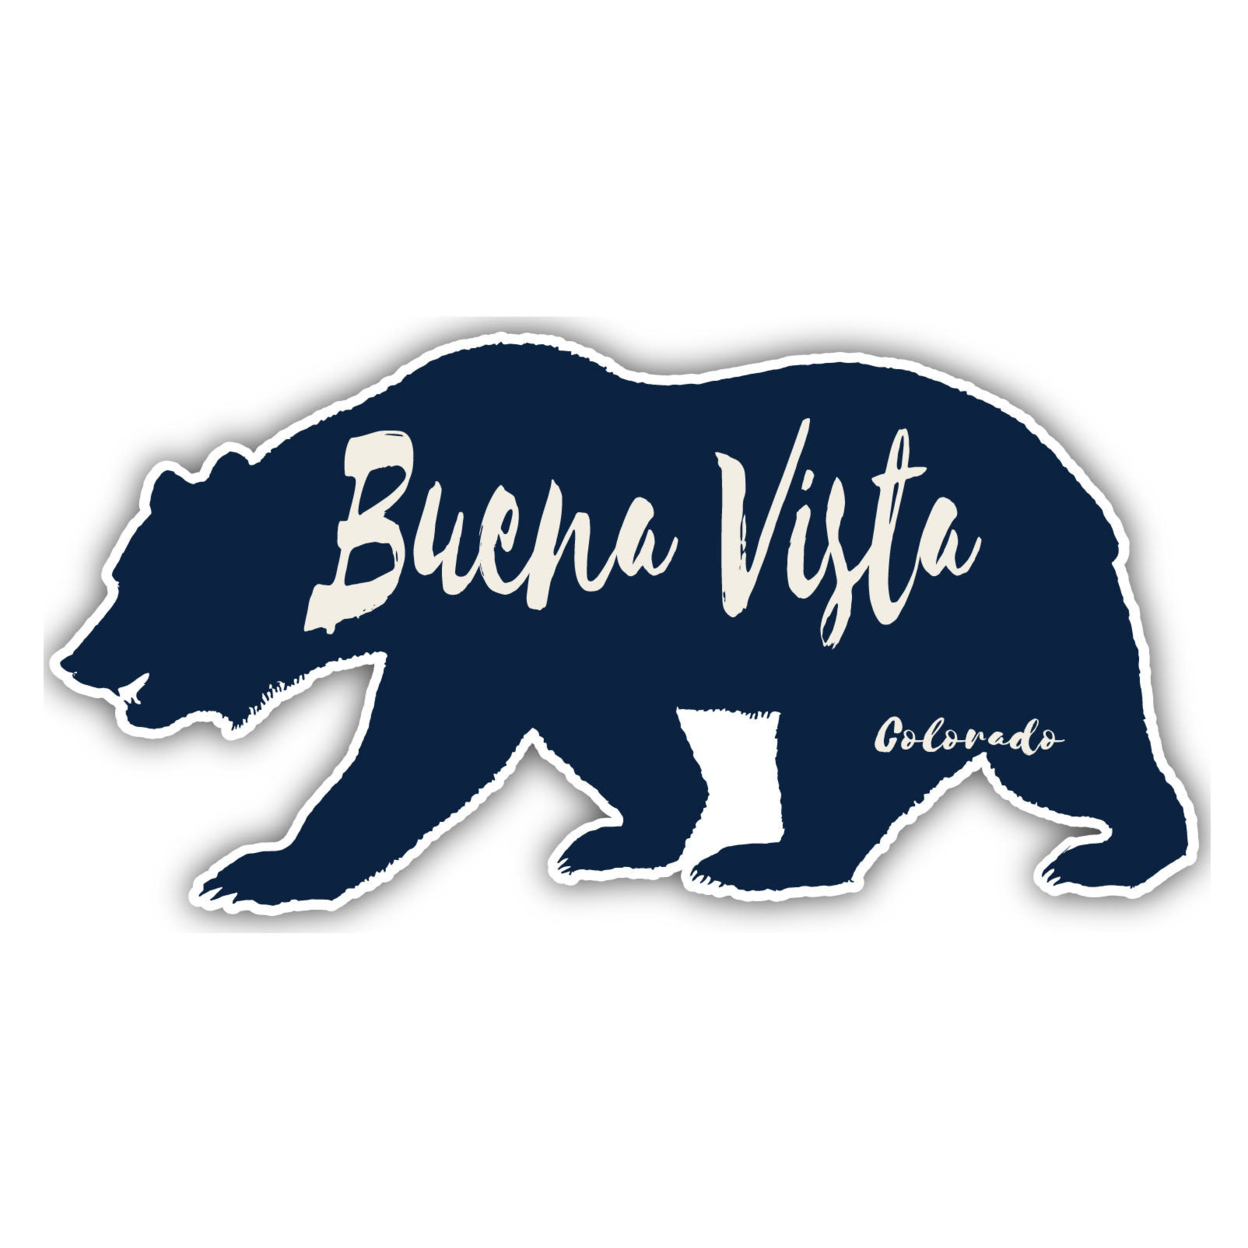 Buena Vista Colorado Souvenir Decorative Stickers (Choose Theme And Size) - 4-Pack, 6-Inch, Bear